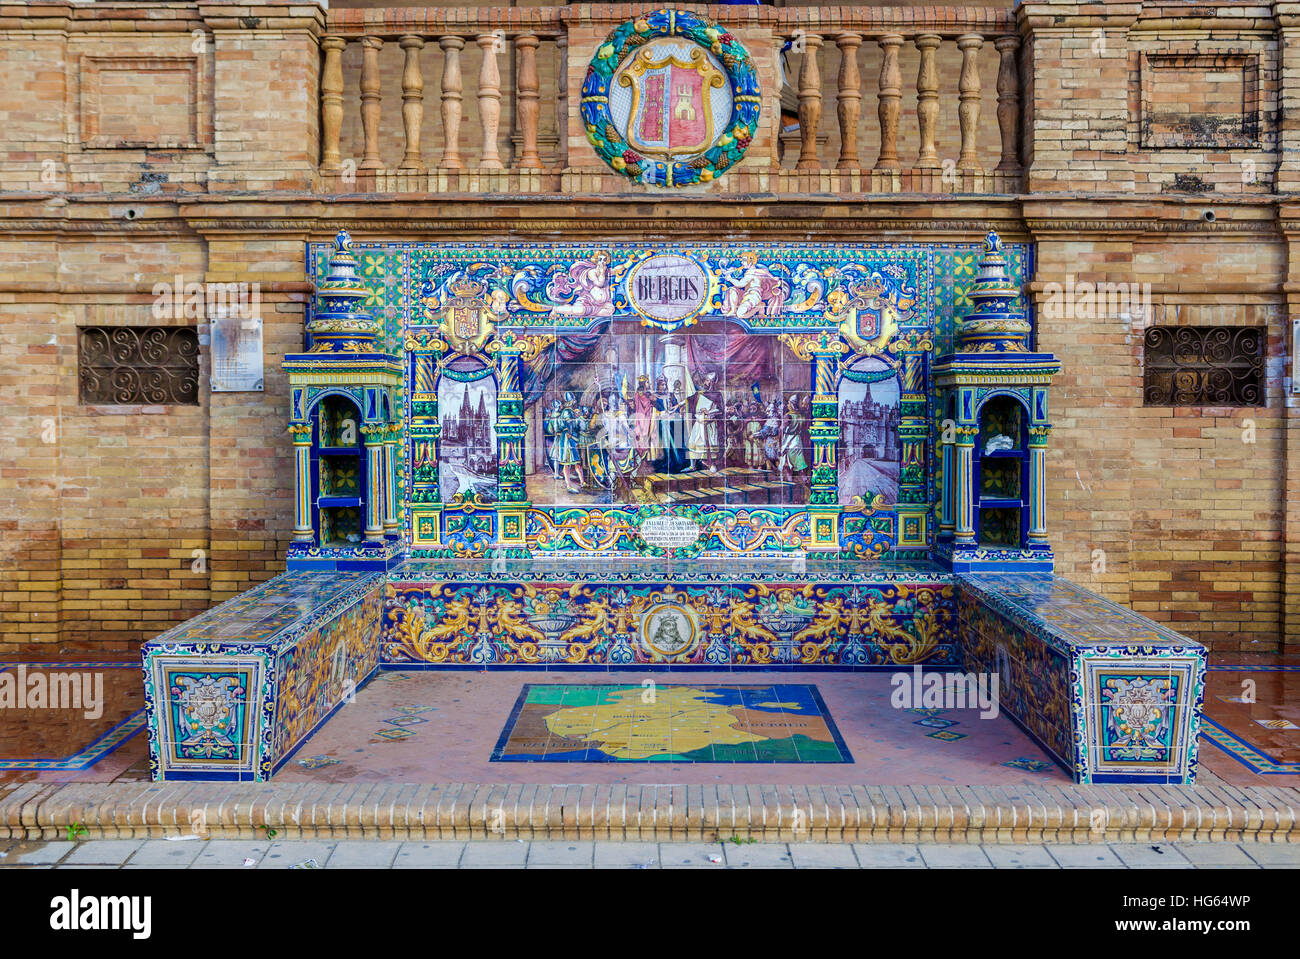 Glazed tiles bench of spanish province of Burgos at Plaza de Espana, Seville, Spain Stock Photo